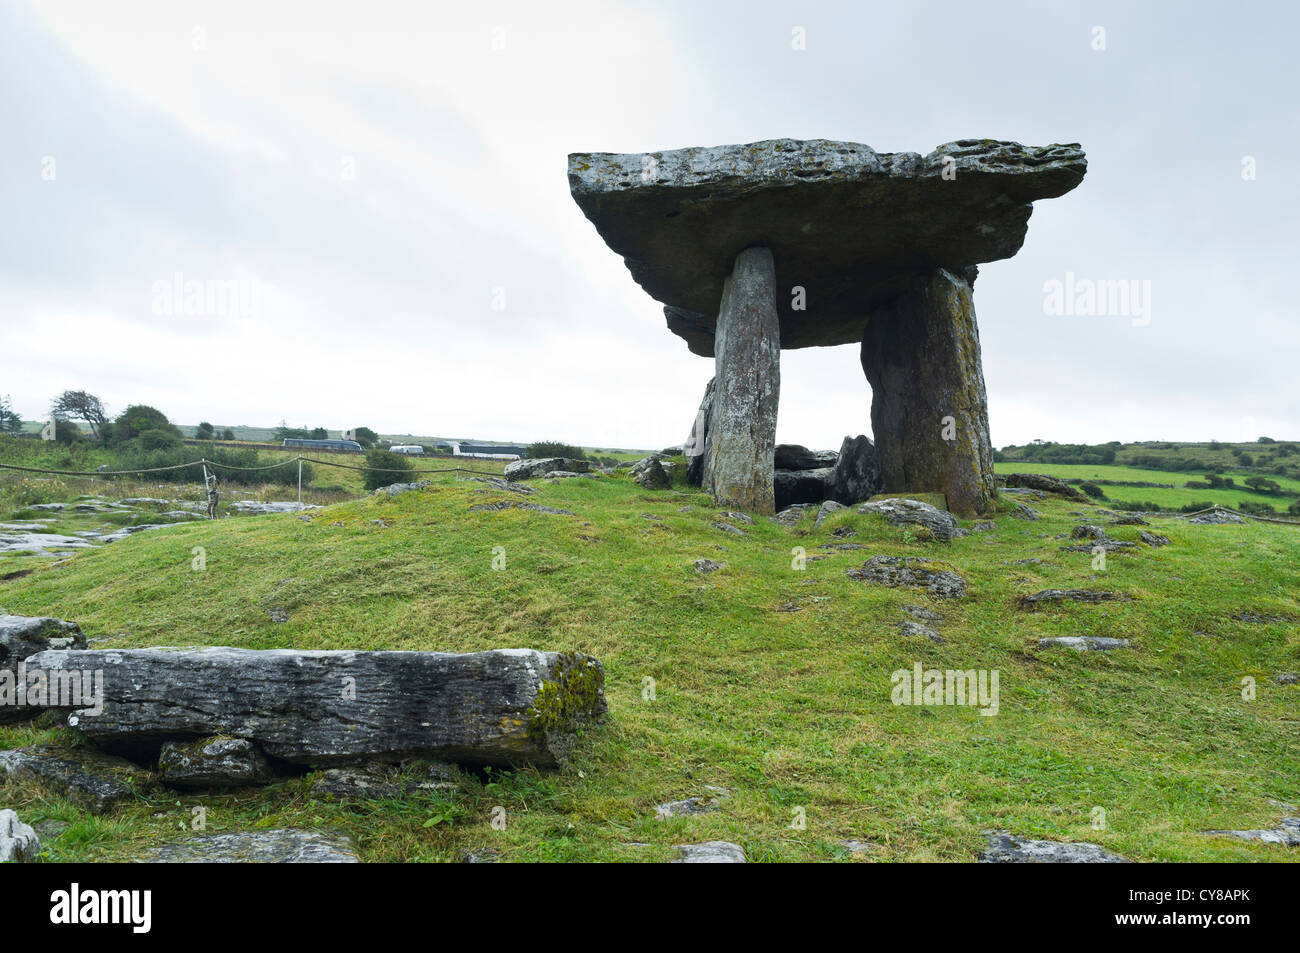 Poulnabrone Portal Grab in die Burren im County Clare, Irland Stockfoto